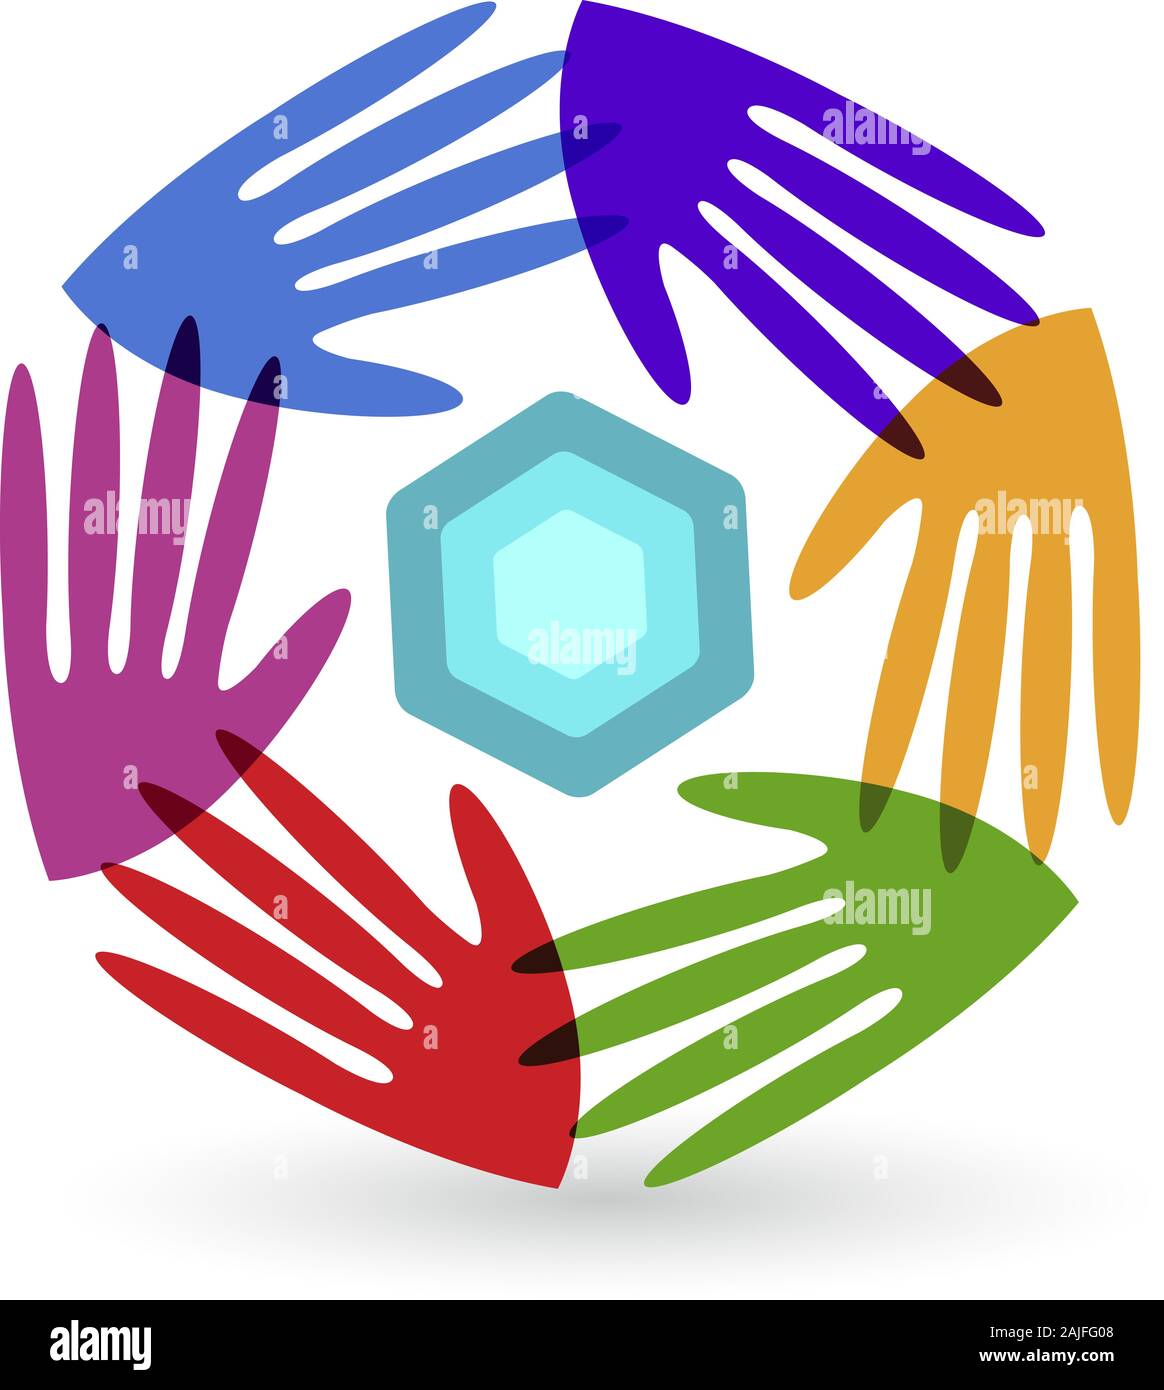 hands logo Stock Photo